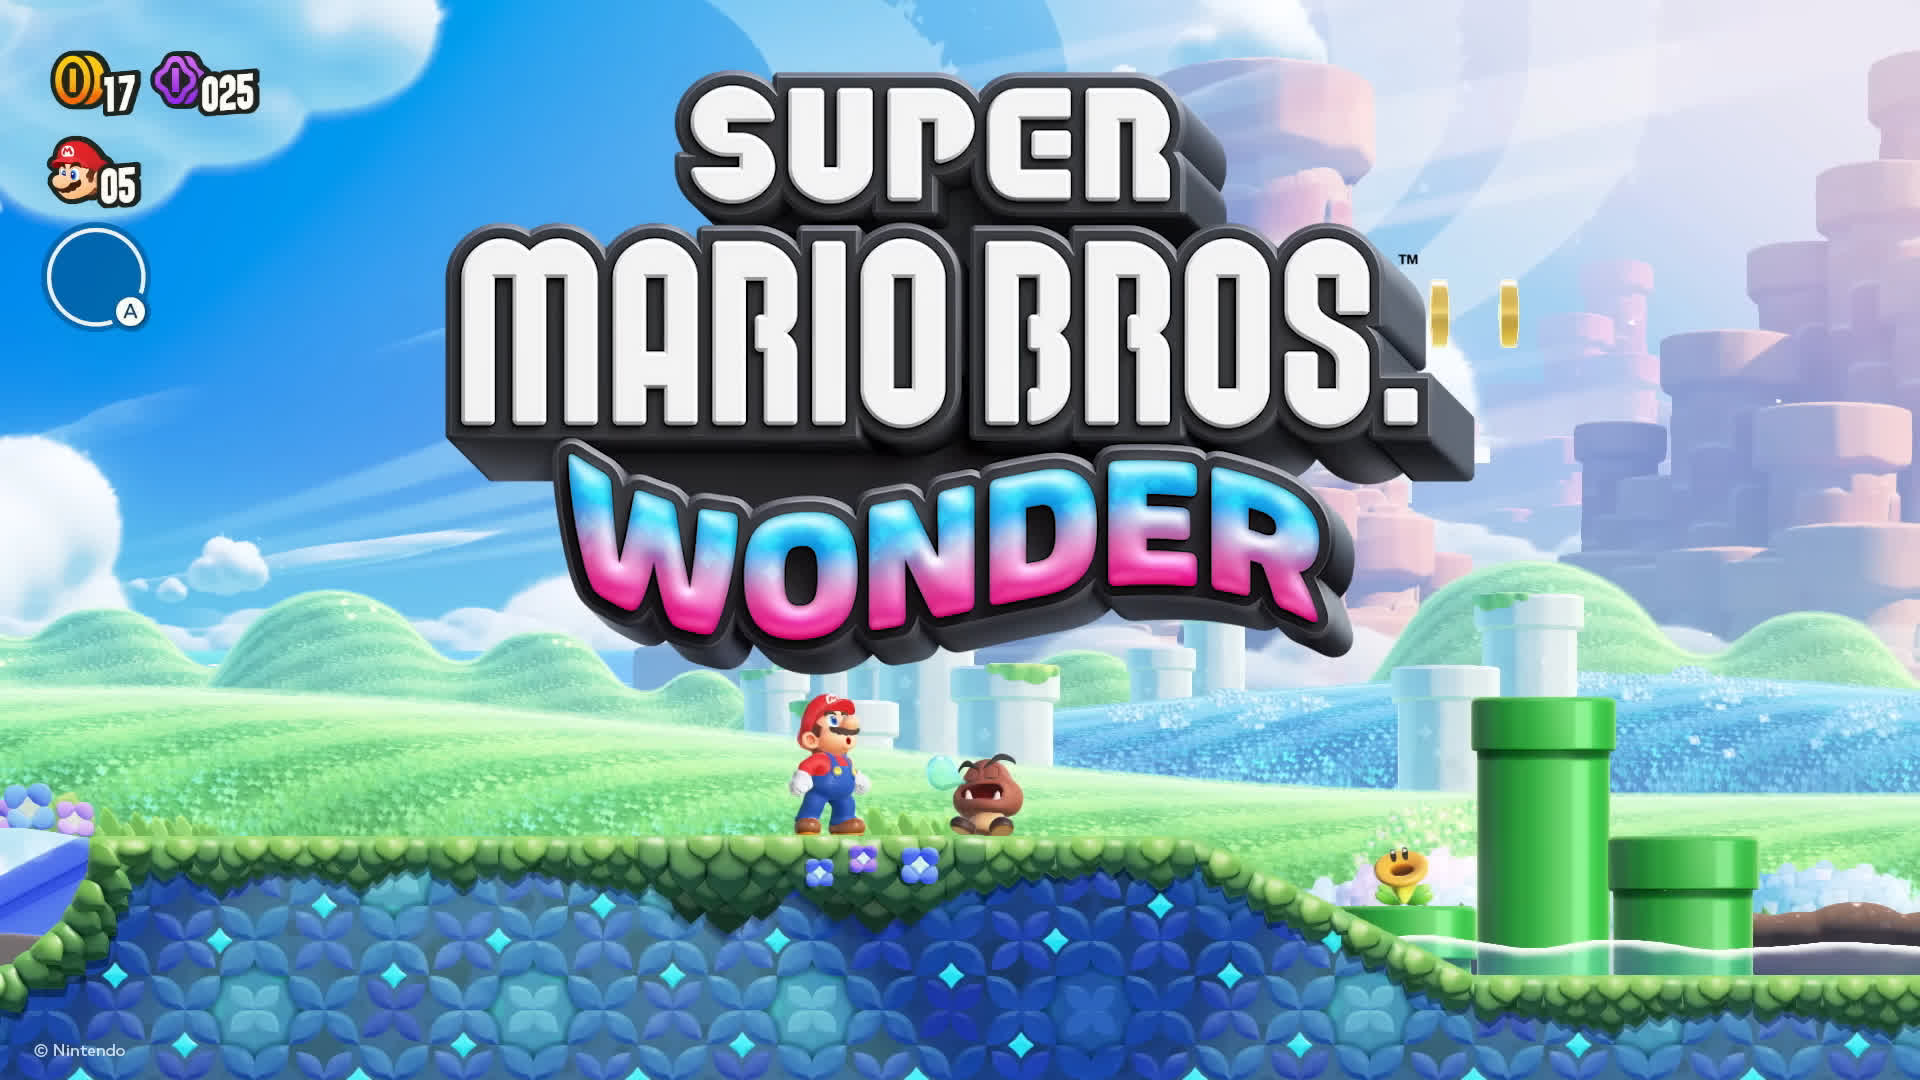 Meet Elephant Mario: Super Mario Bros. Wonder is coming, Princess Peach game teased